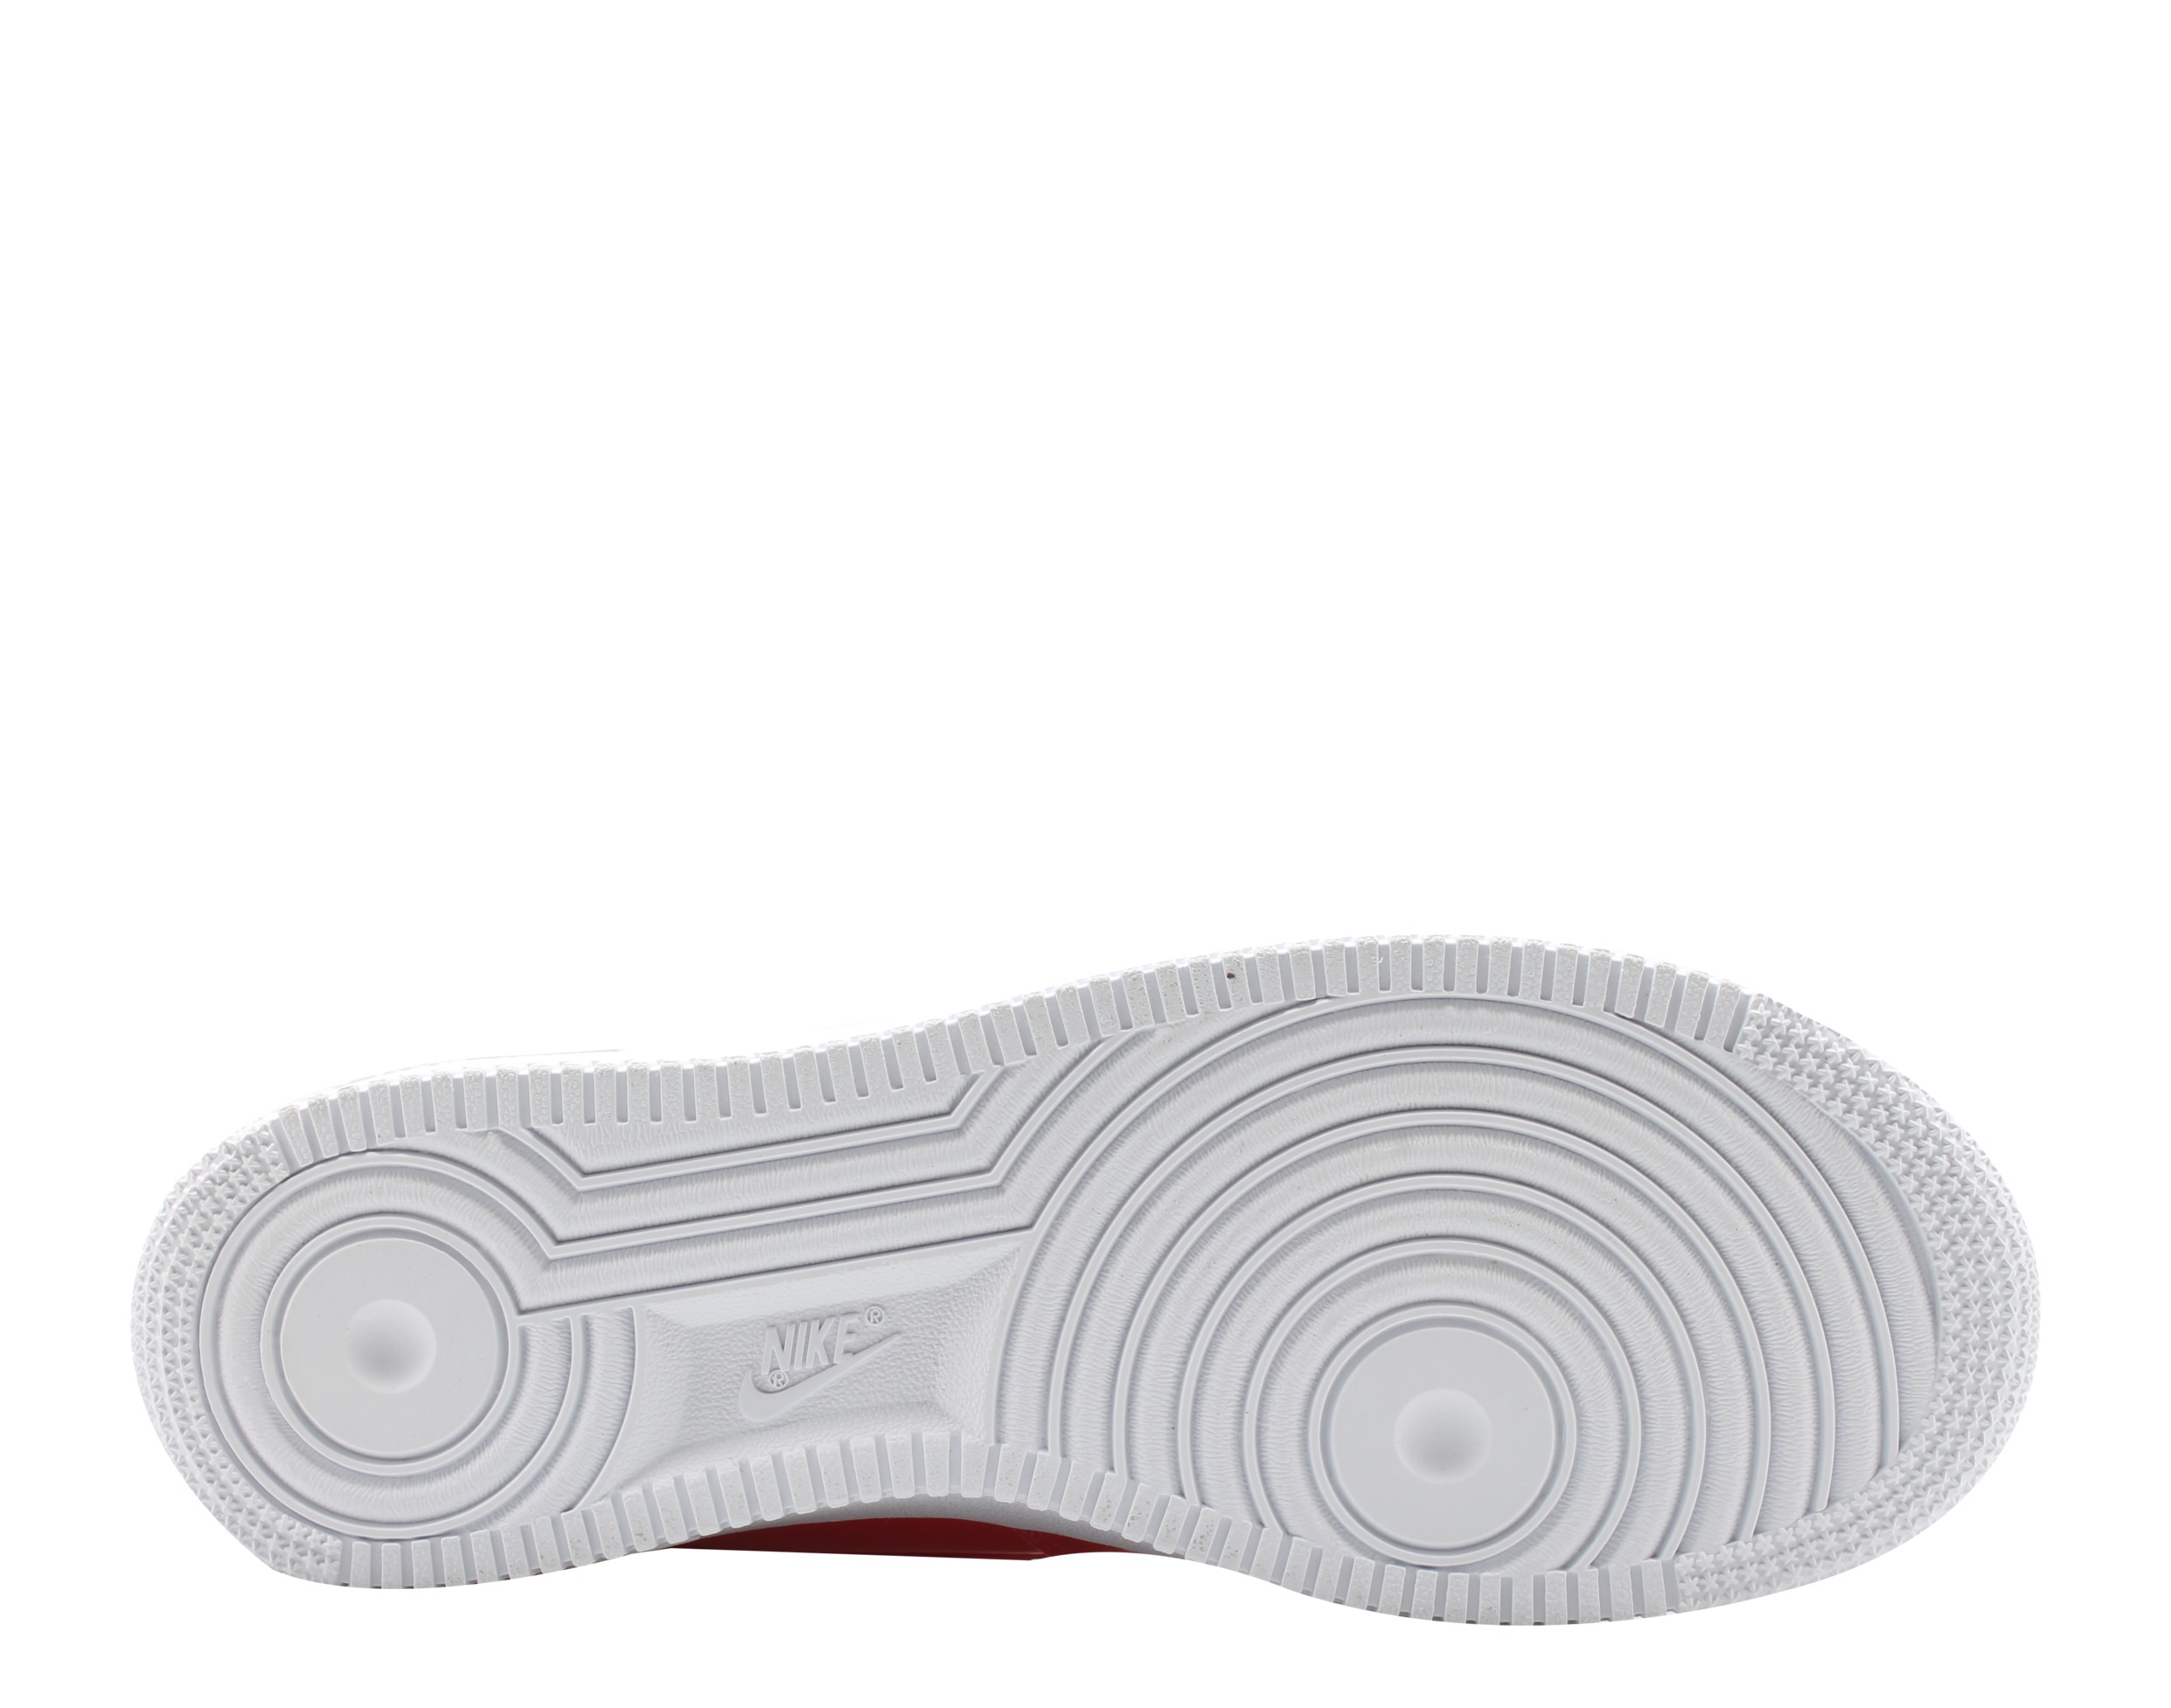 Nike Air Force 1 '07 LV8 UV Men's Shoes Siren Red/White aj9505-600 